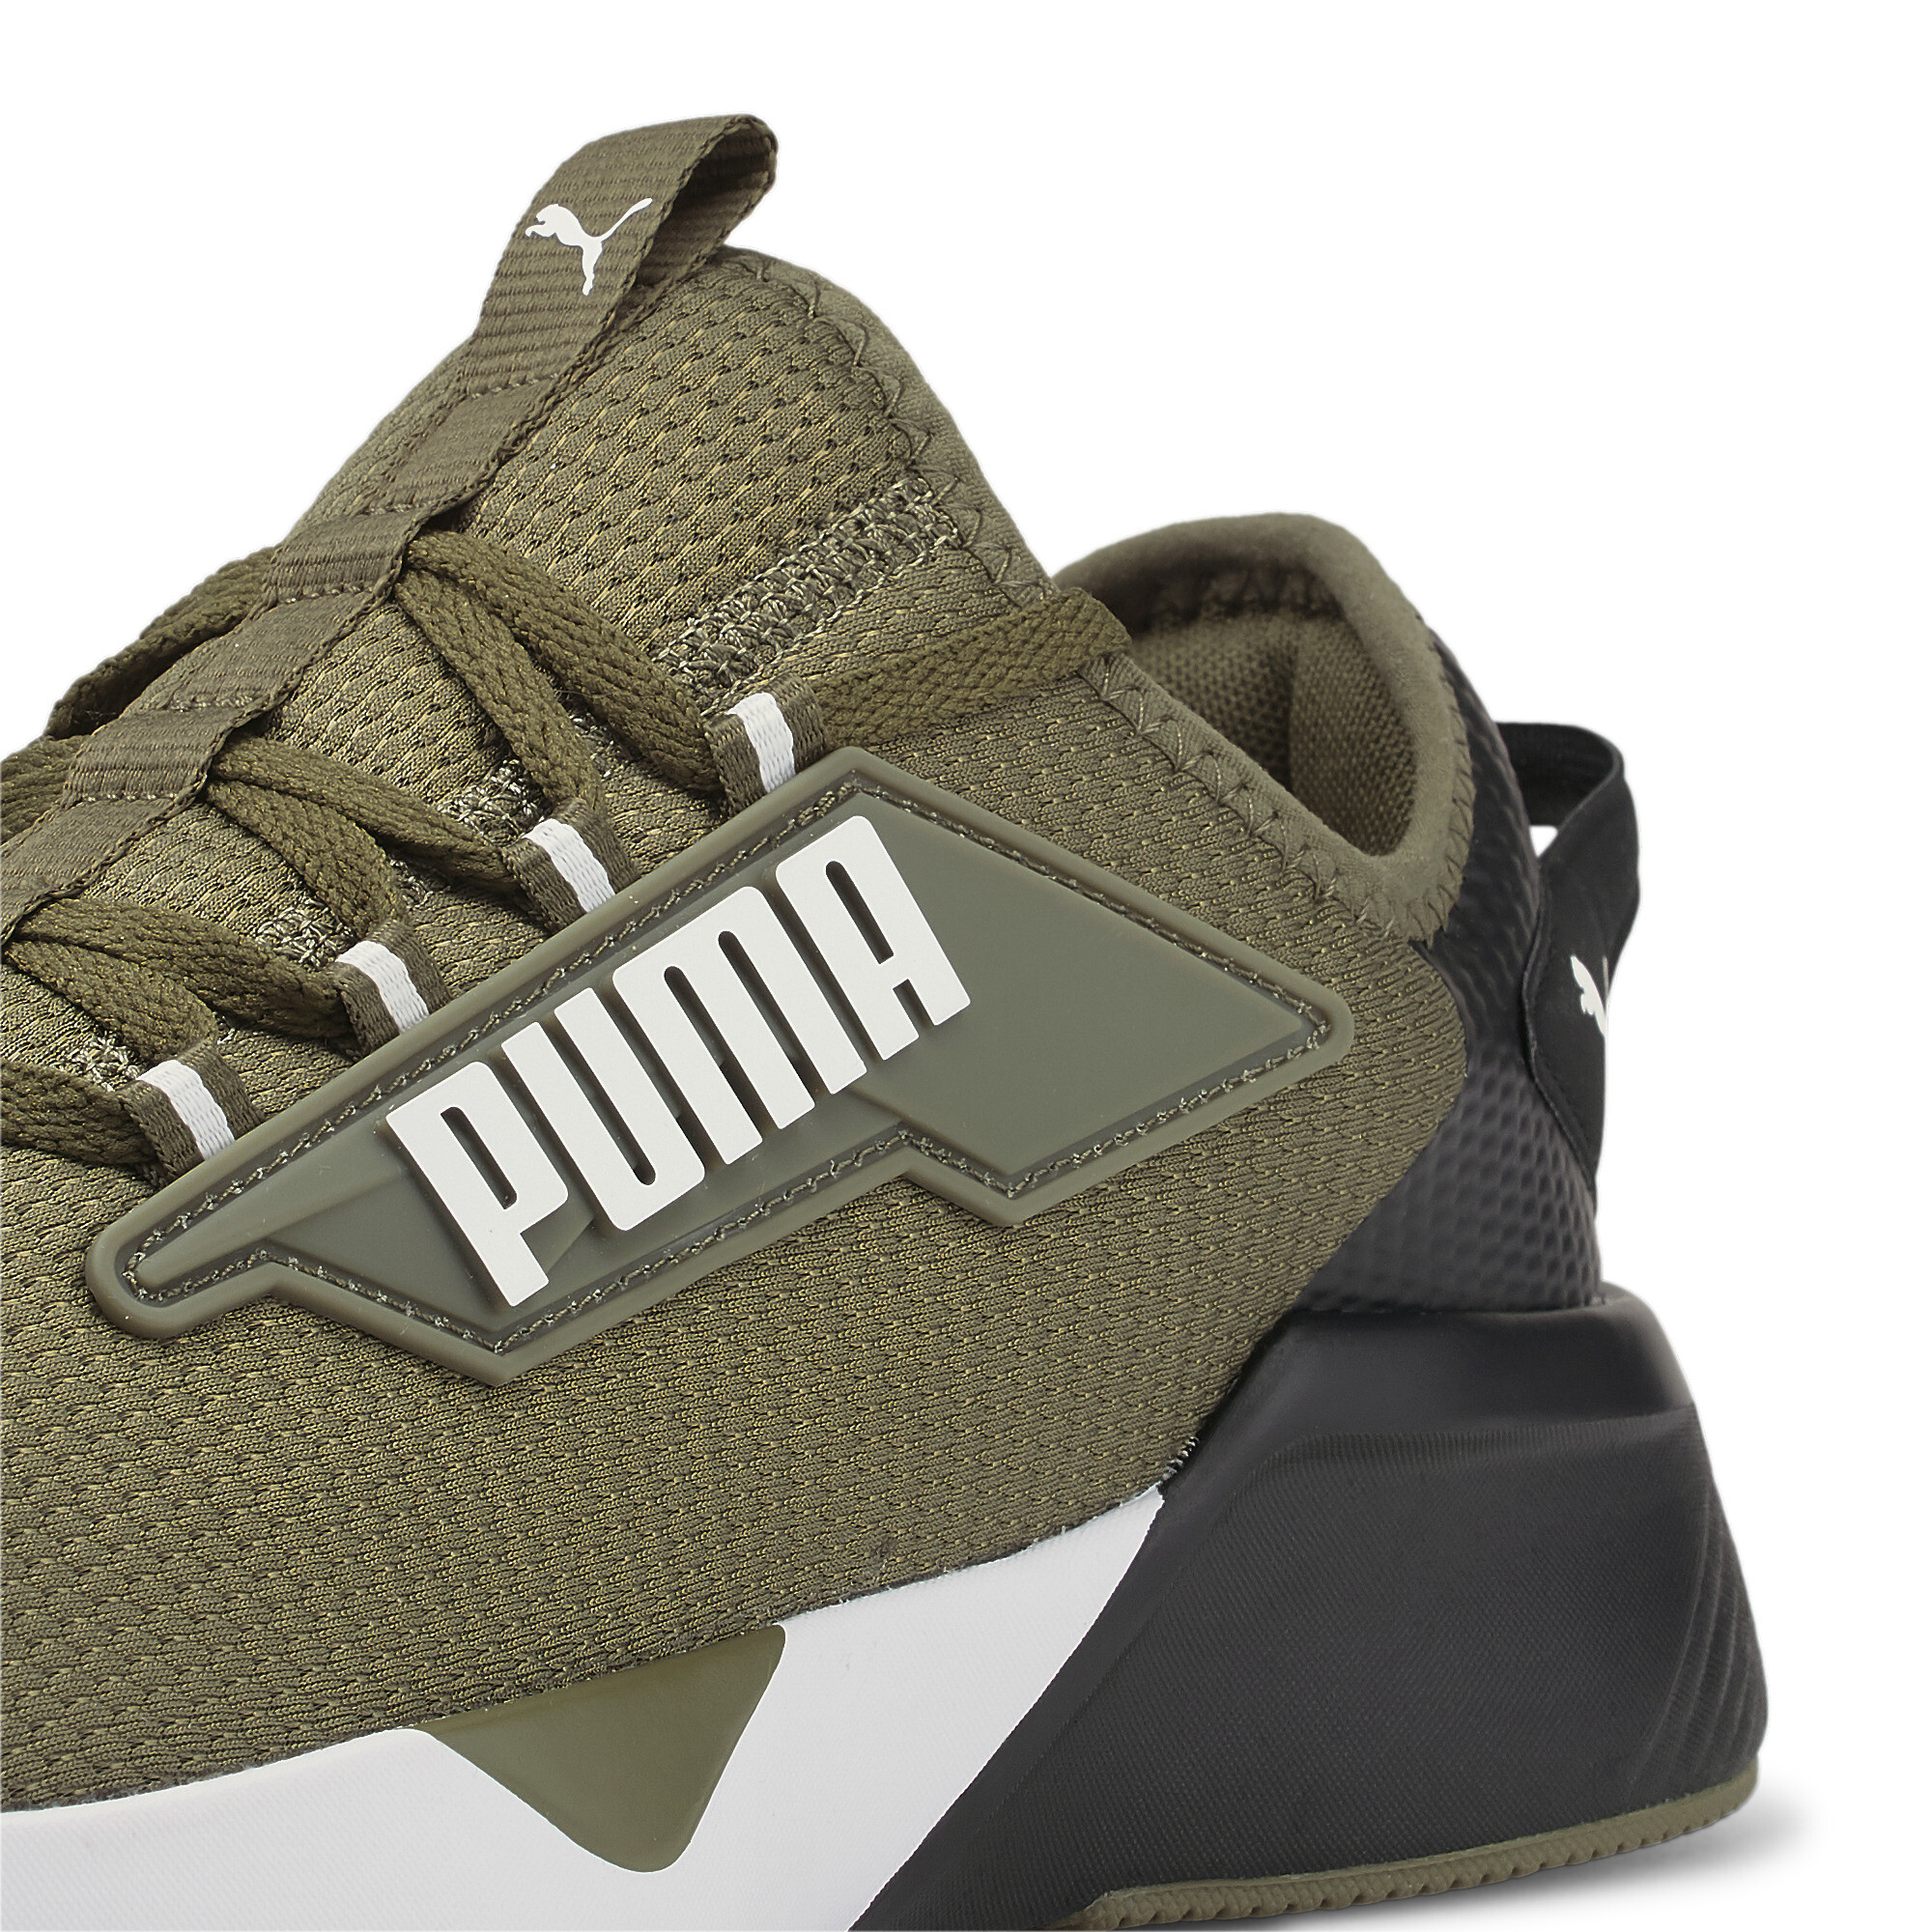 Puma Retaliate 2 Running Shoes, Green, Size 45, Shoes